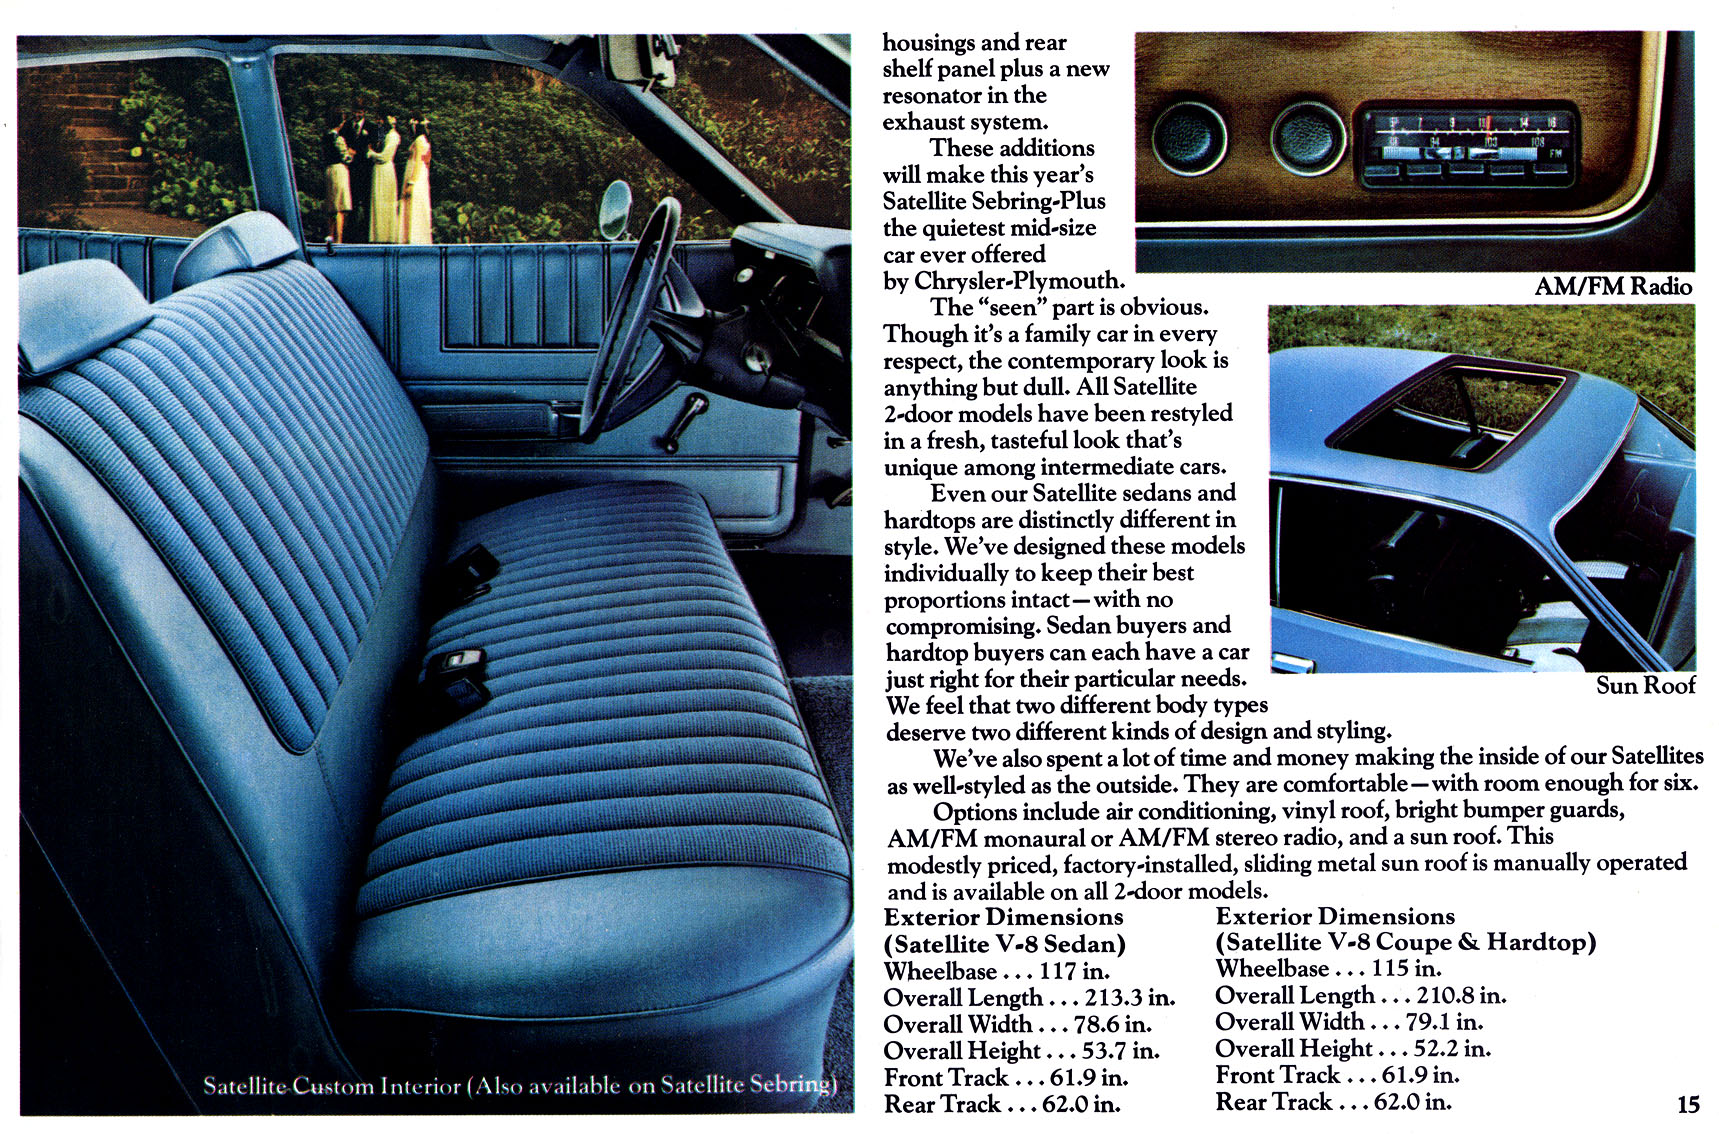 1973_Chrysler-Plymouth_Brochure-15